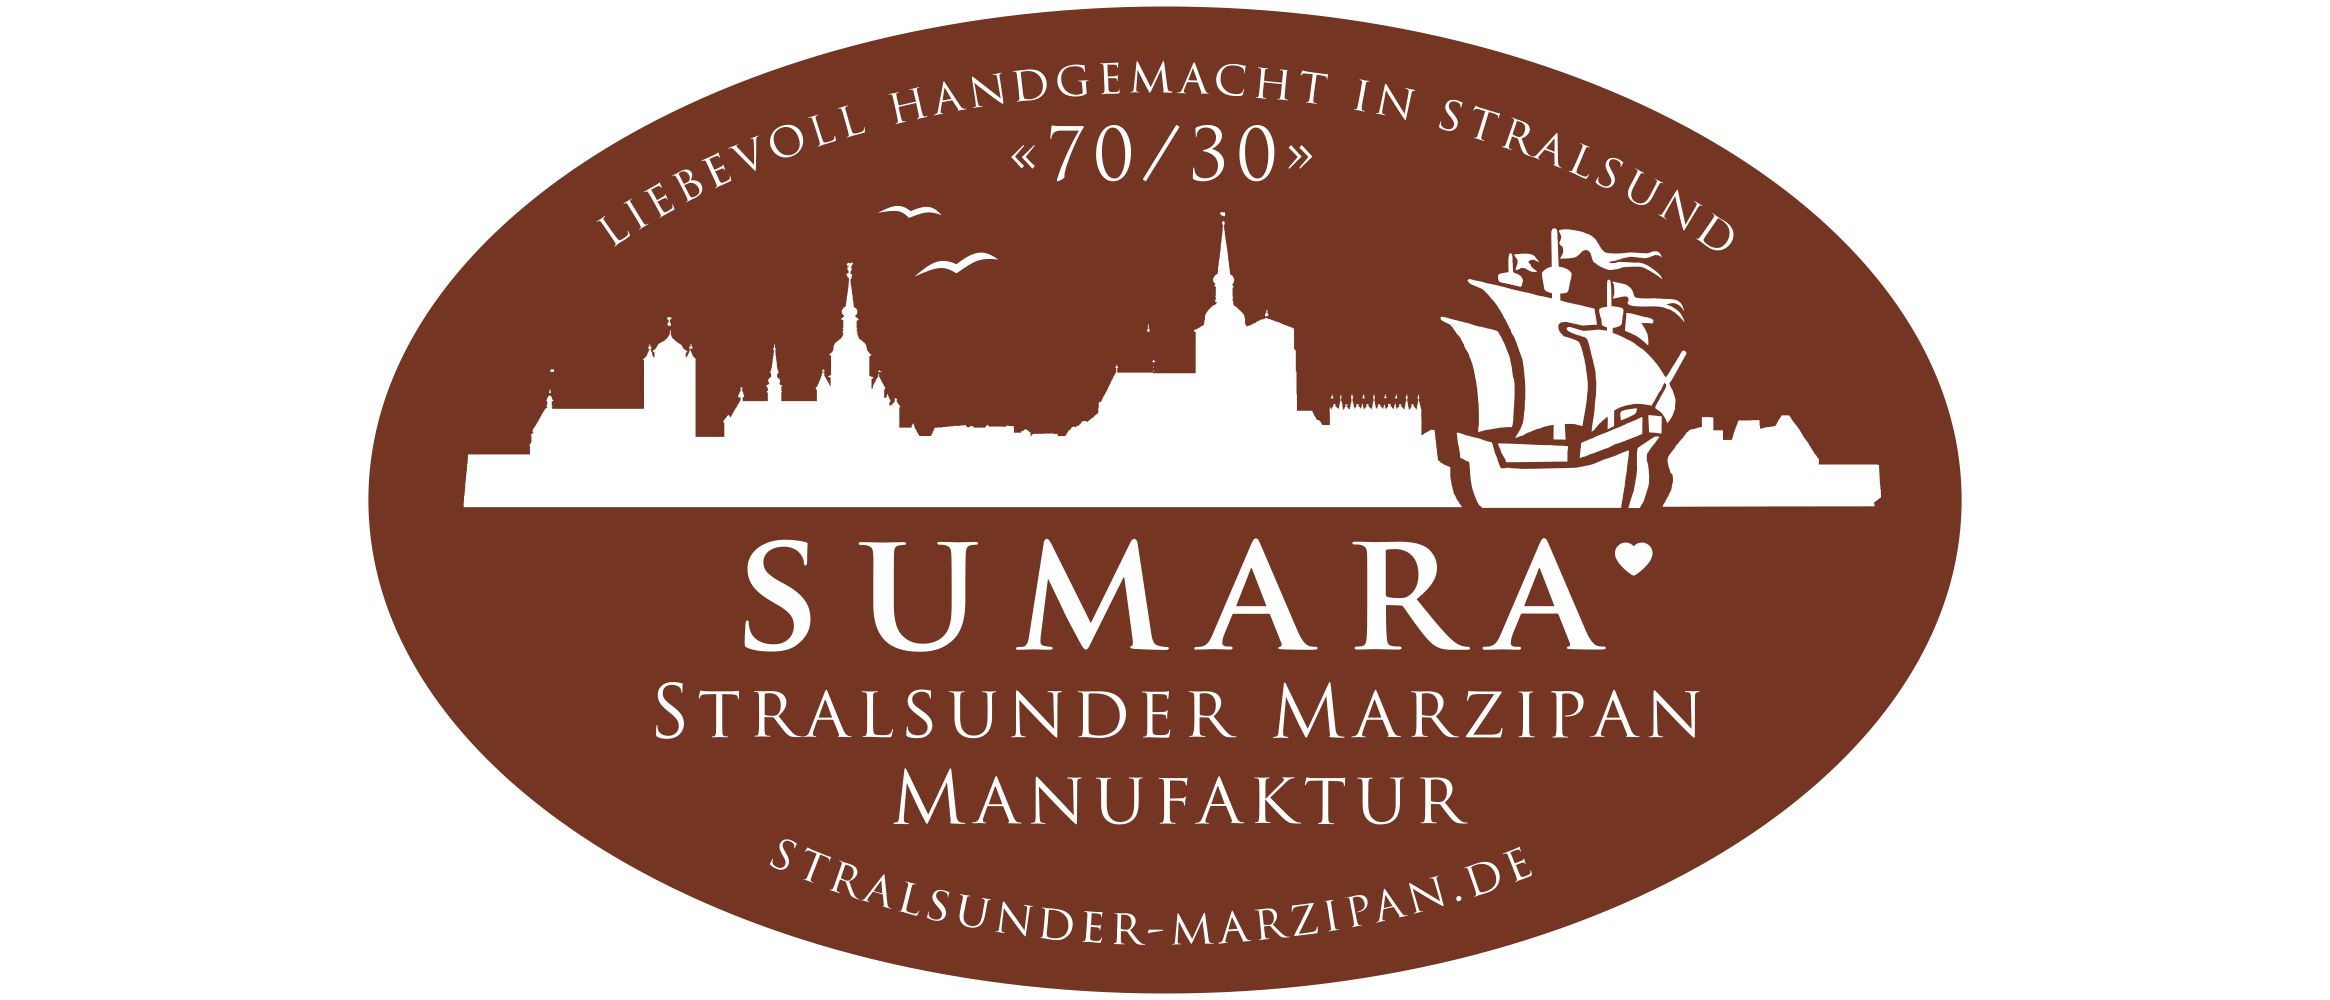 SUMARA - Stralsunder Marzipan Manufaktur